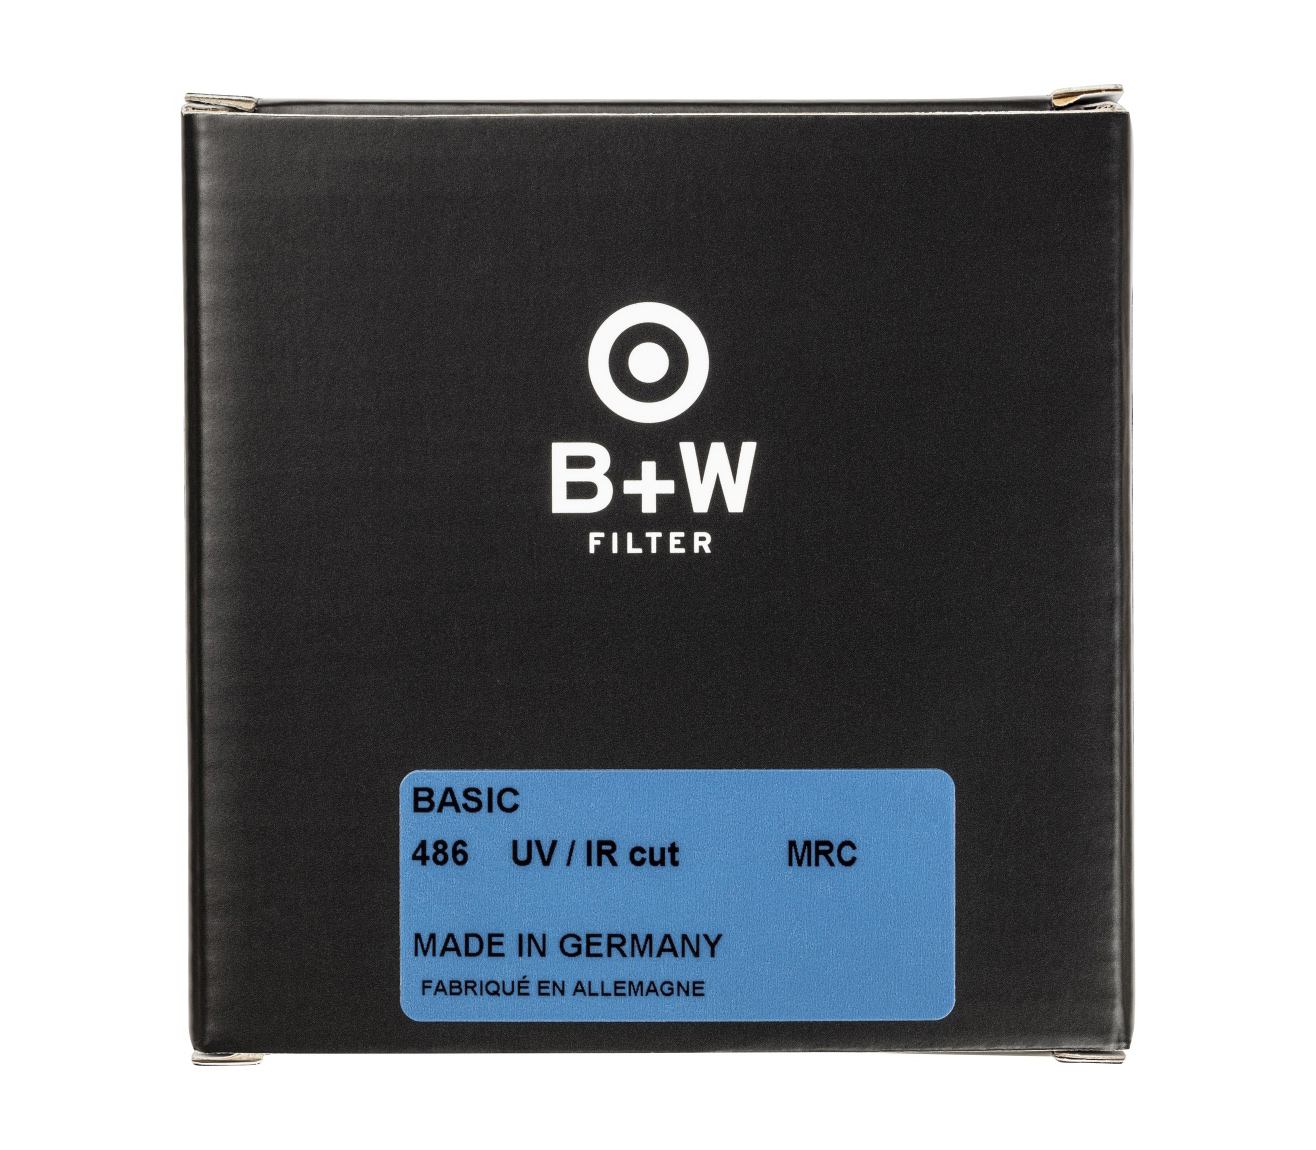 BASIC 486 UV/IR cut 58mm